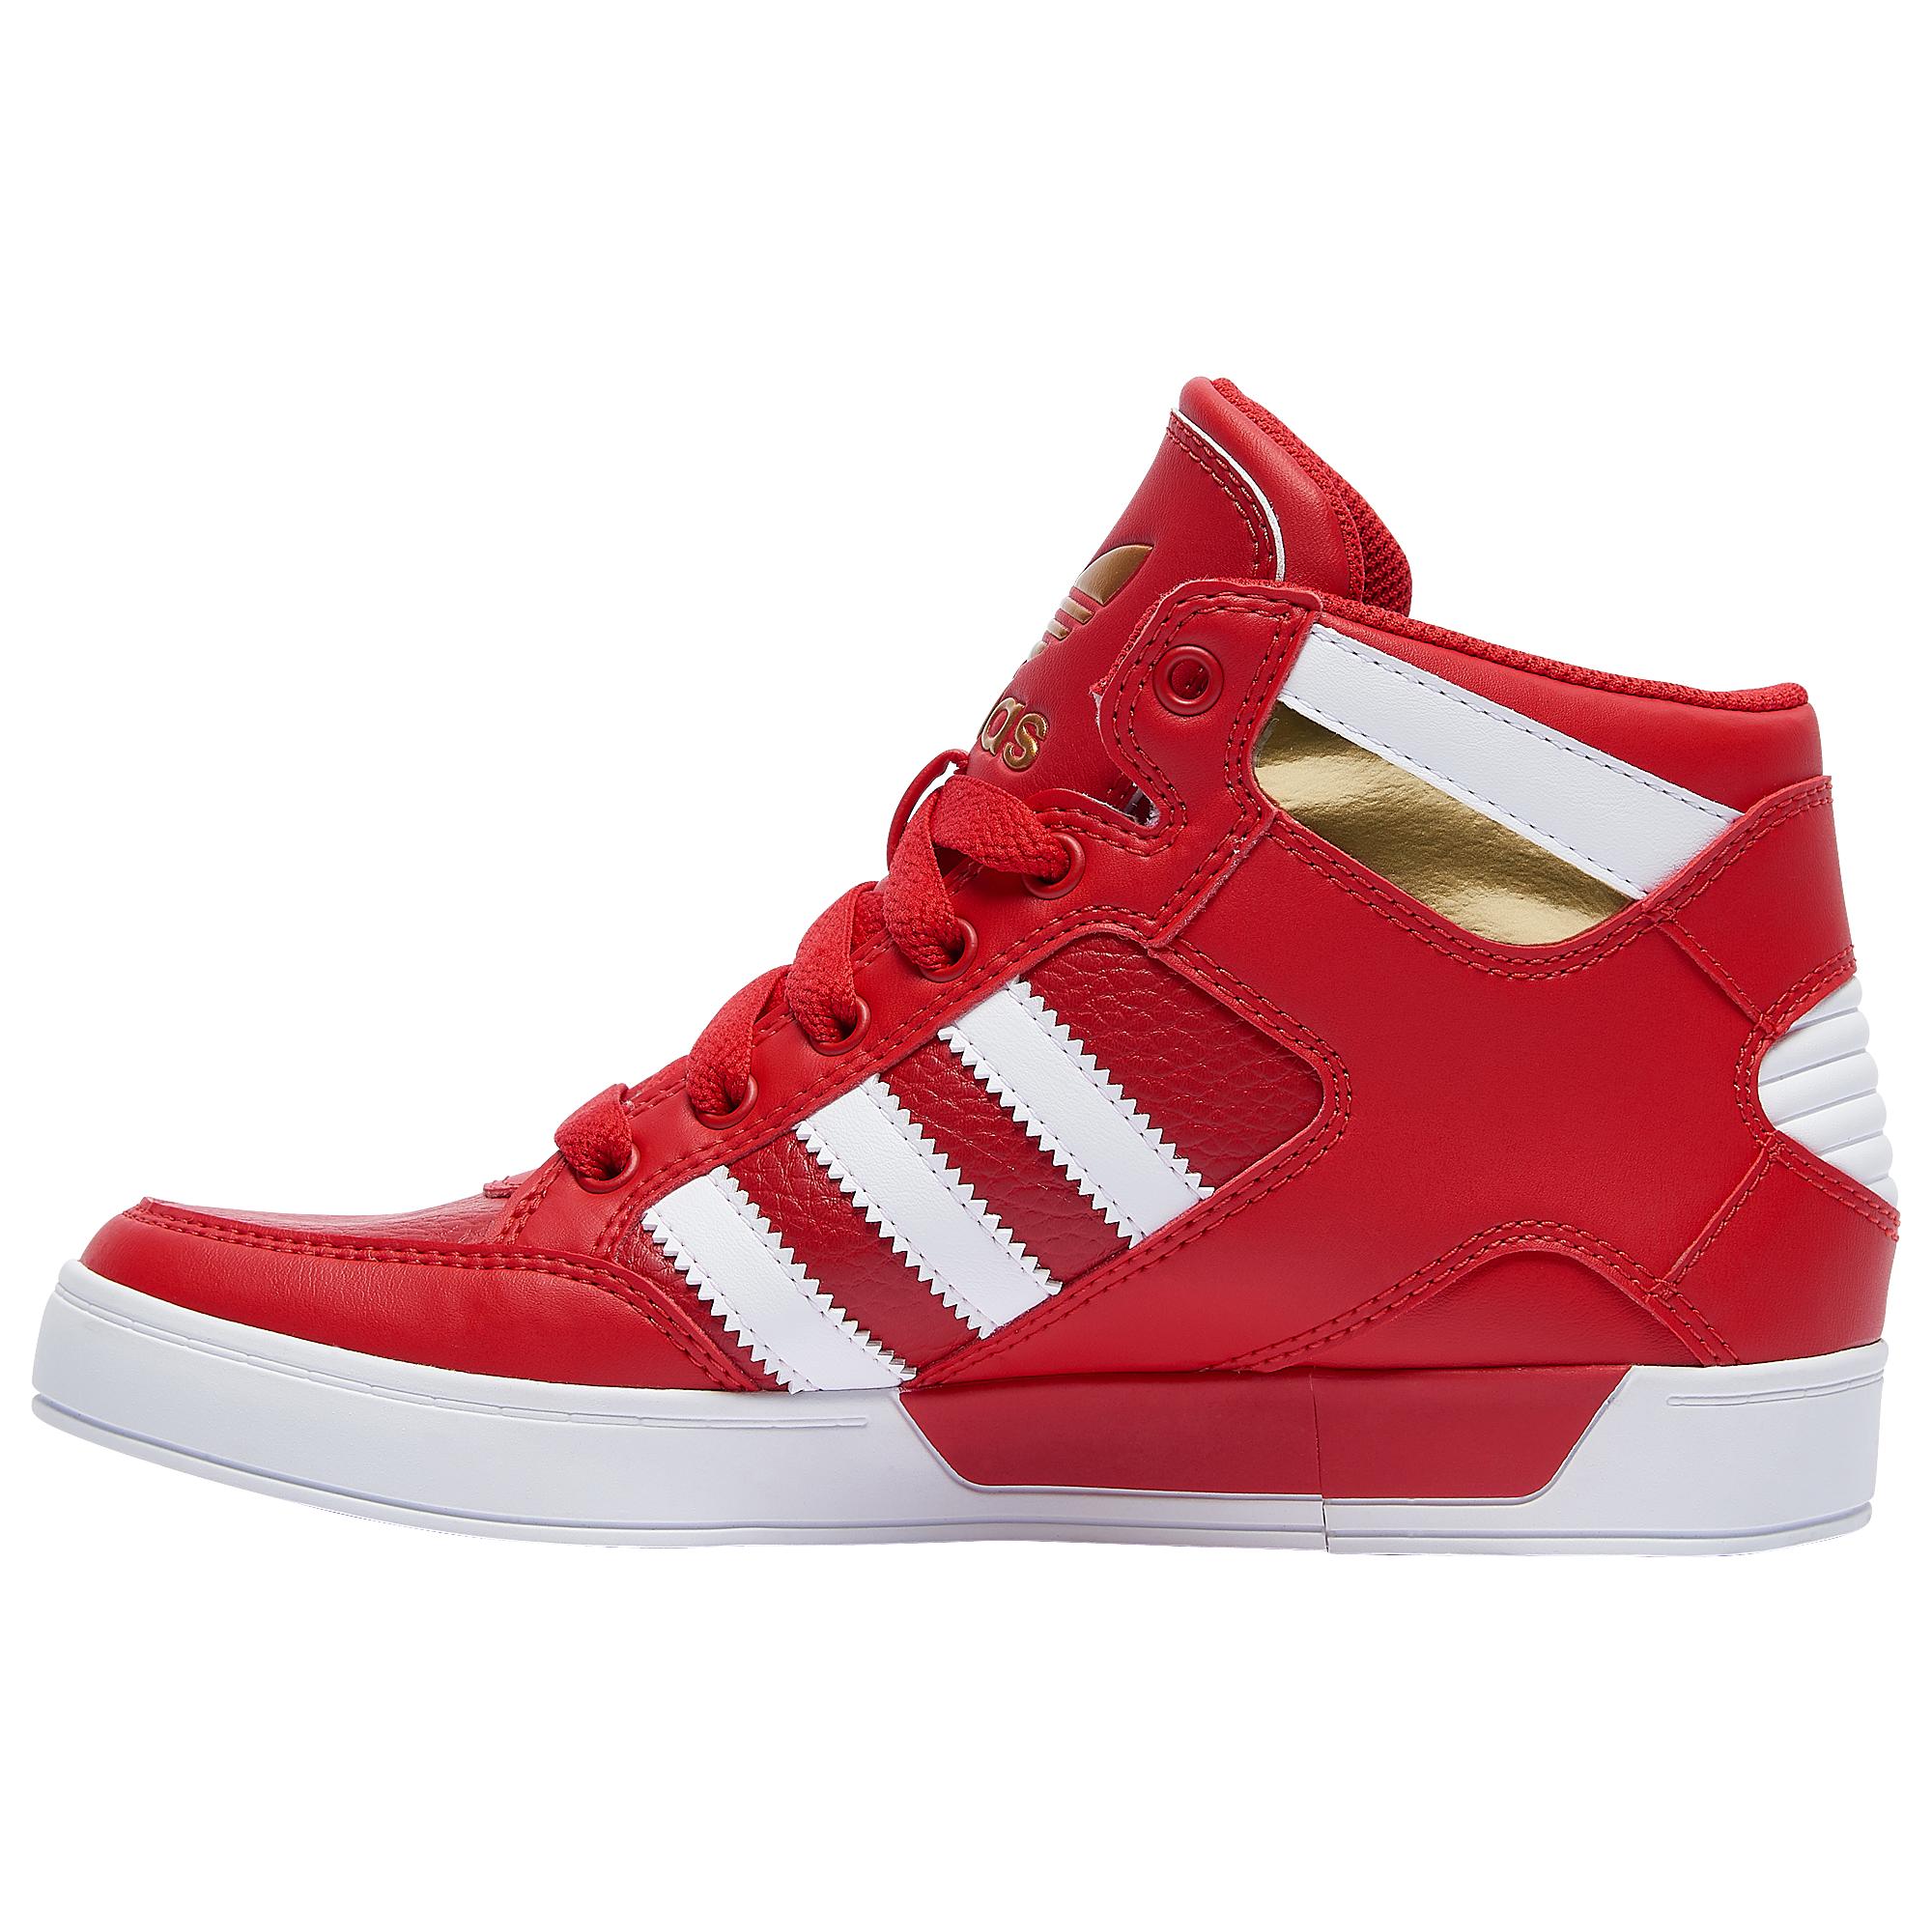 adidas Originals Rubber Hardcourt Hi Tennis Shoes in Red/White ...